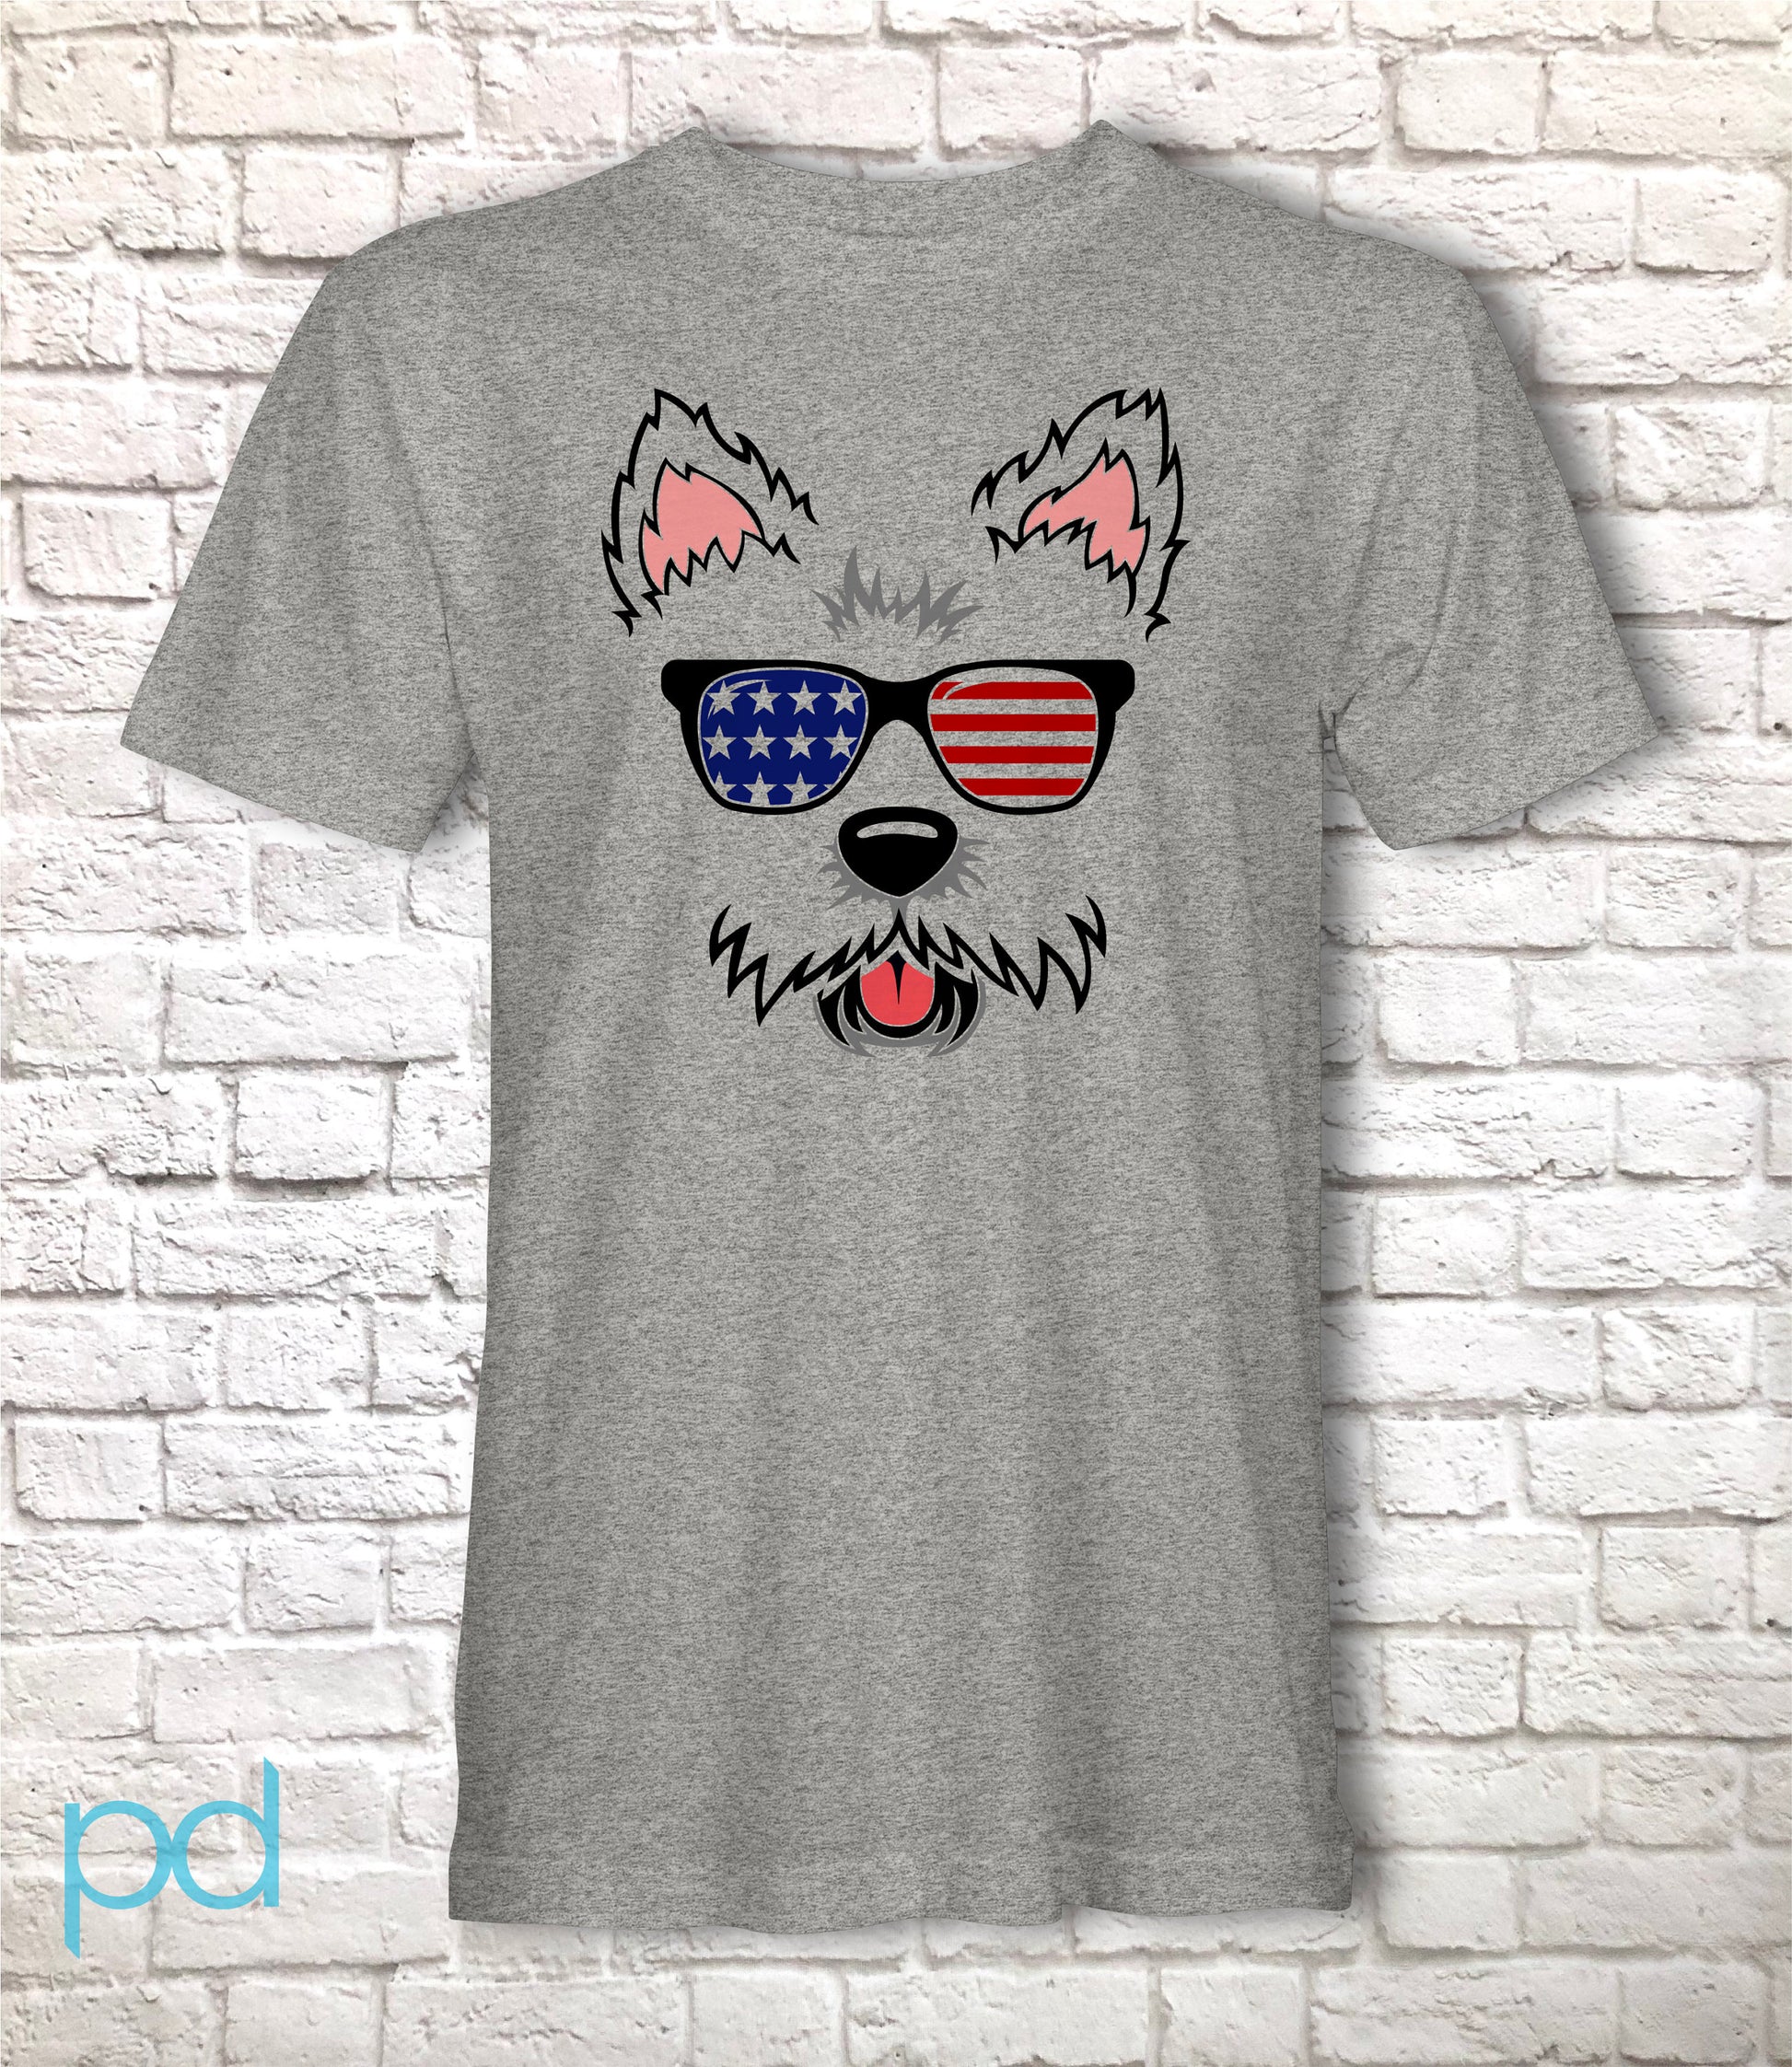 Cute Westie T-Shirt, West Highland Terrier Gift Idea, Adorable Fluffy Dog Face Tee Shirt T Top, USA Stars & Stripes Flag Sunglasses